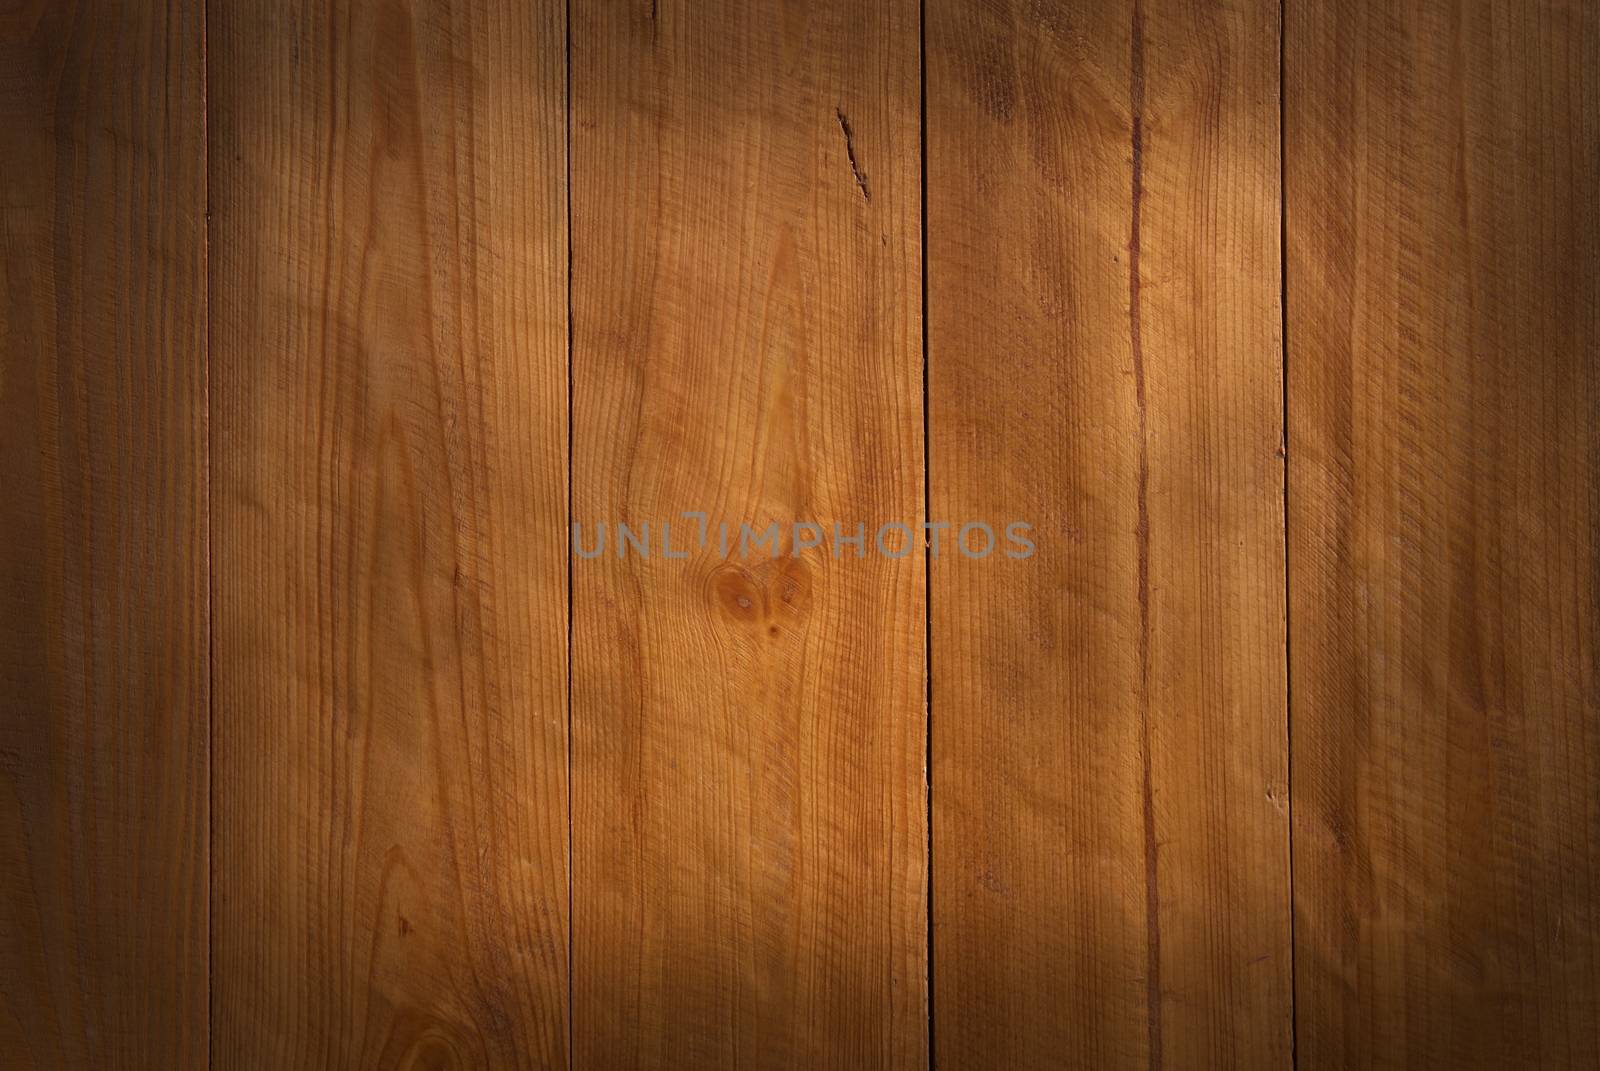 Wooden texture by vapi